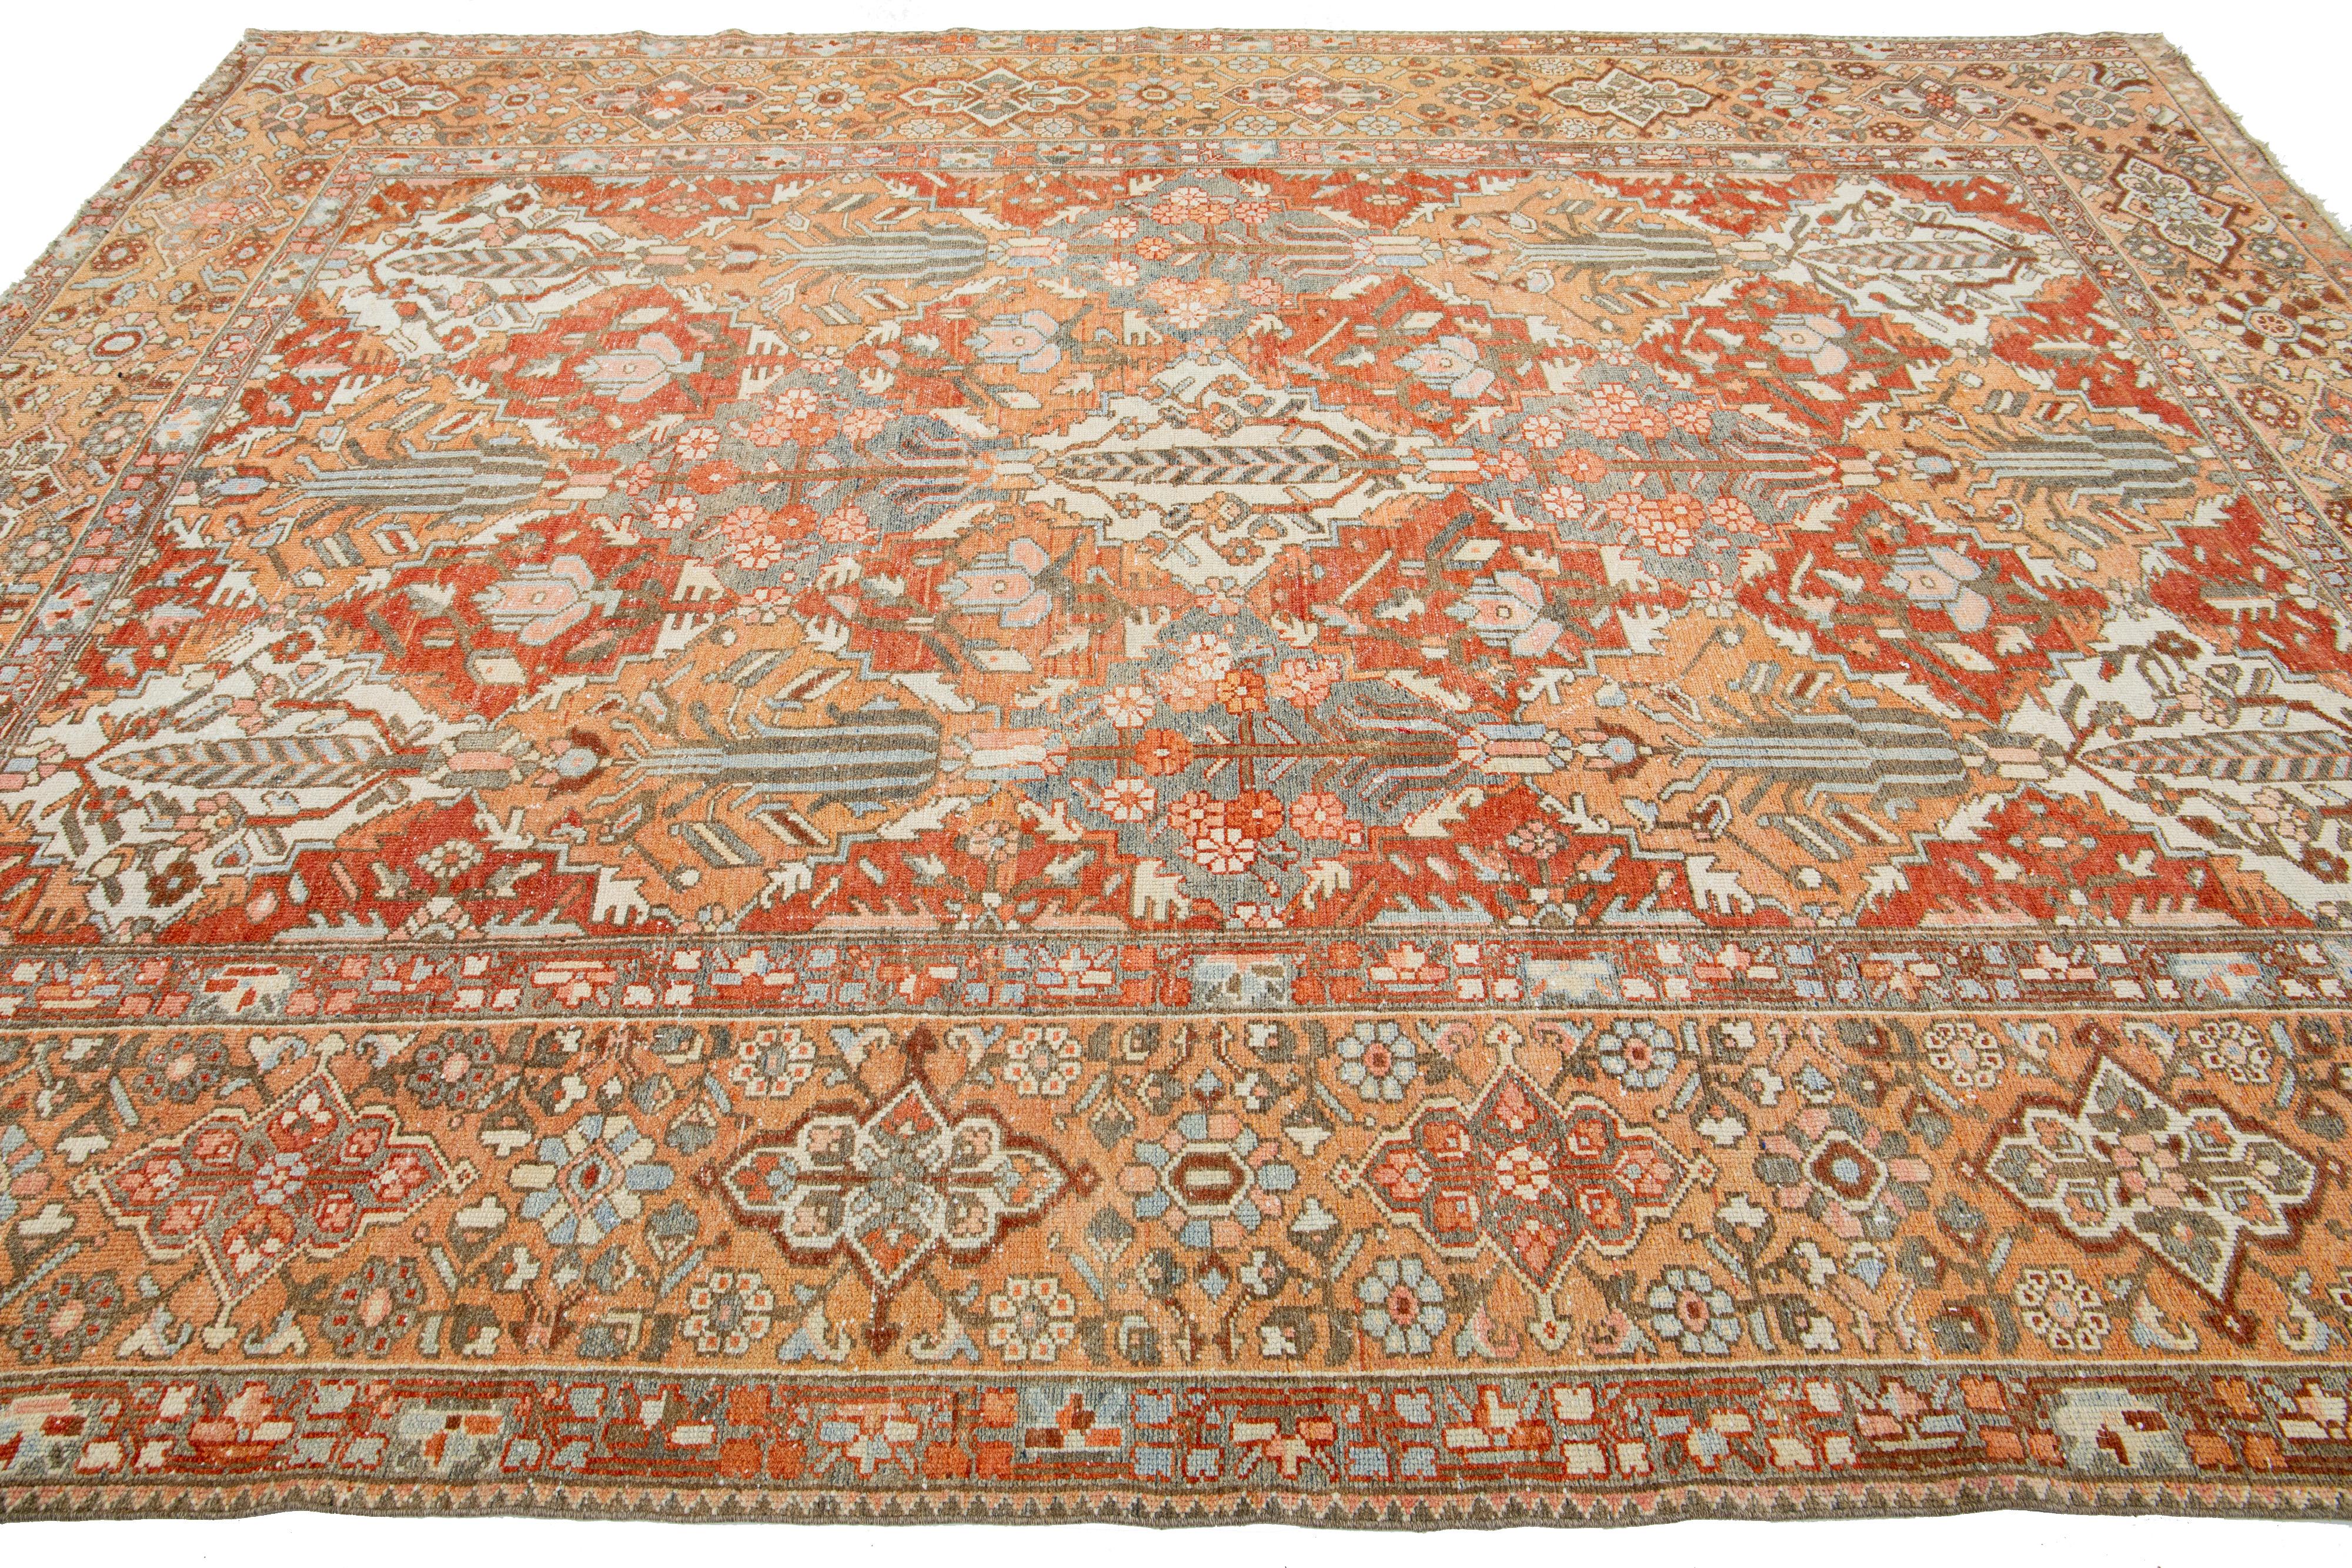 Handmade 1920s Persian Bakhtiari Wool Rug with Floral Motif In Orange  In Good Condition For Sale In Norwalk, CT